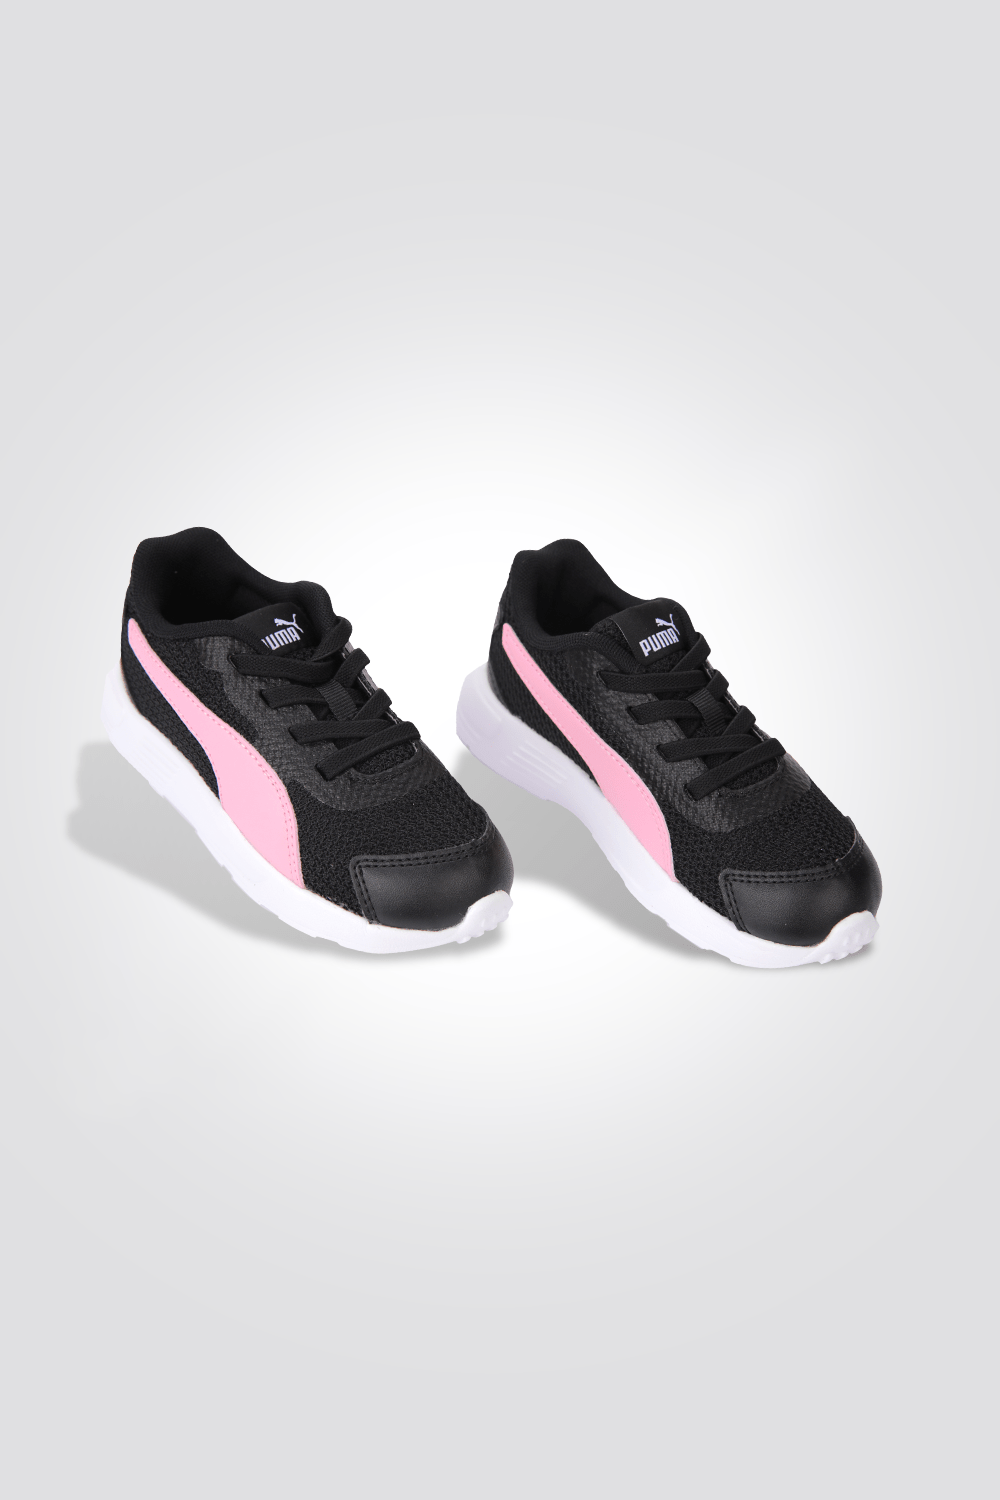 PUMA - נעלי ספורט לנערות Taper AC PS בצבע שחור וורוד - MASHBIR//365